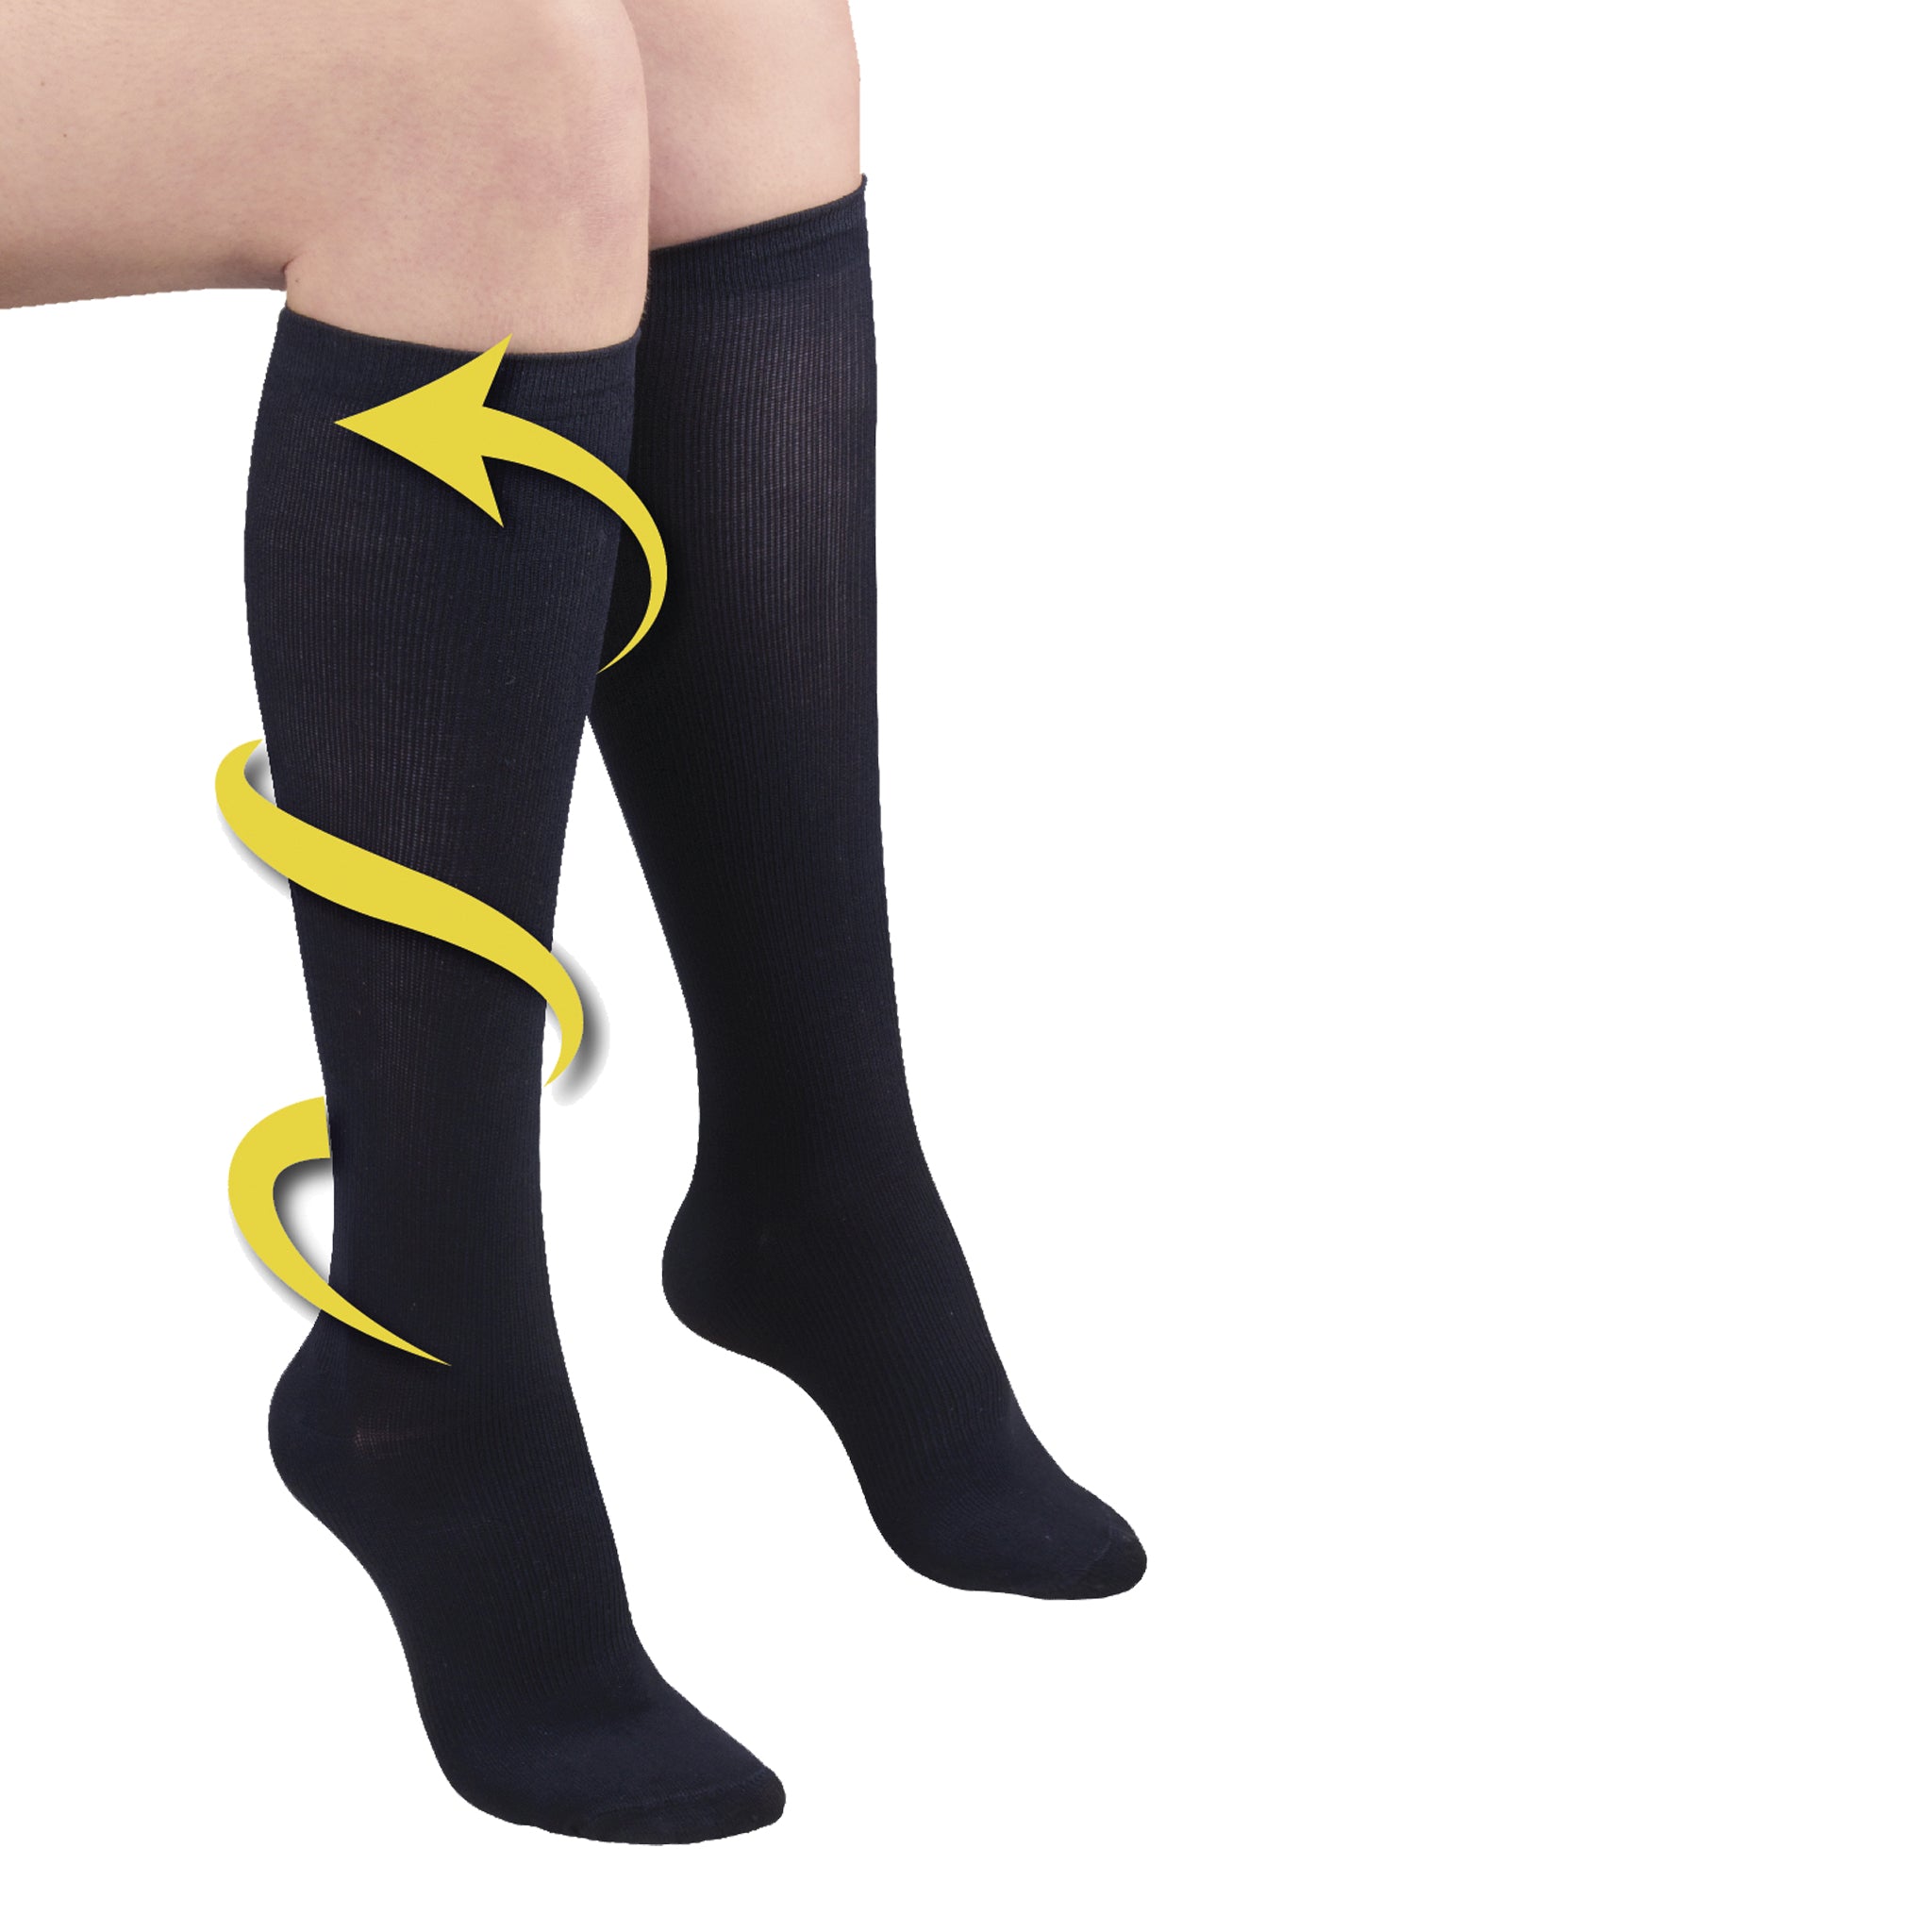 Compression stockings nylon & microfiber for women